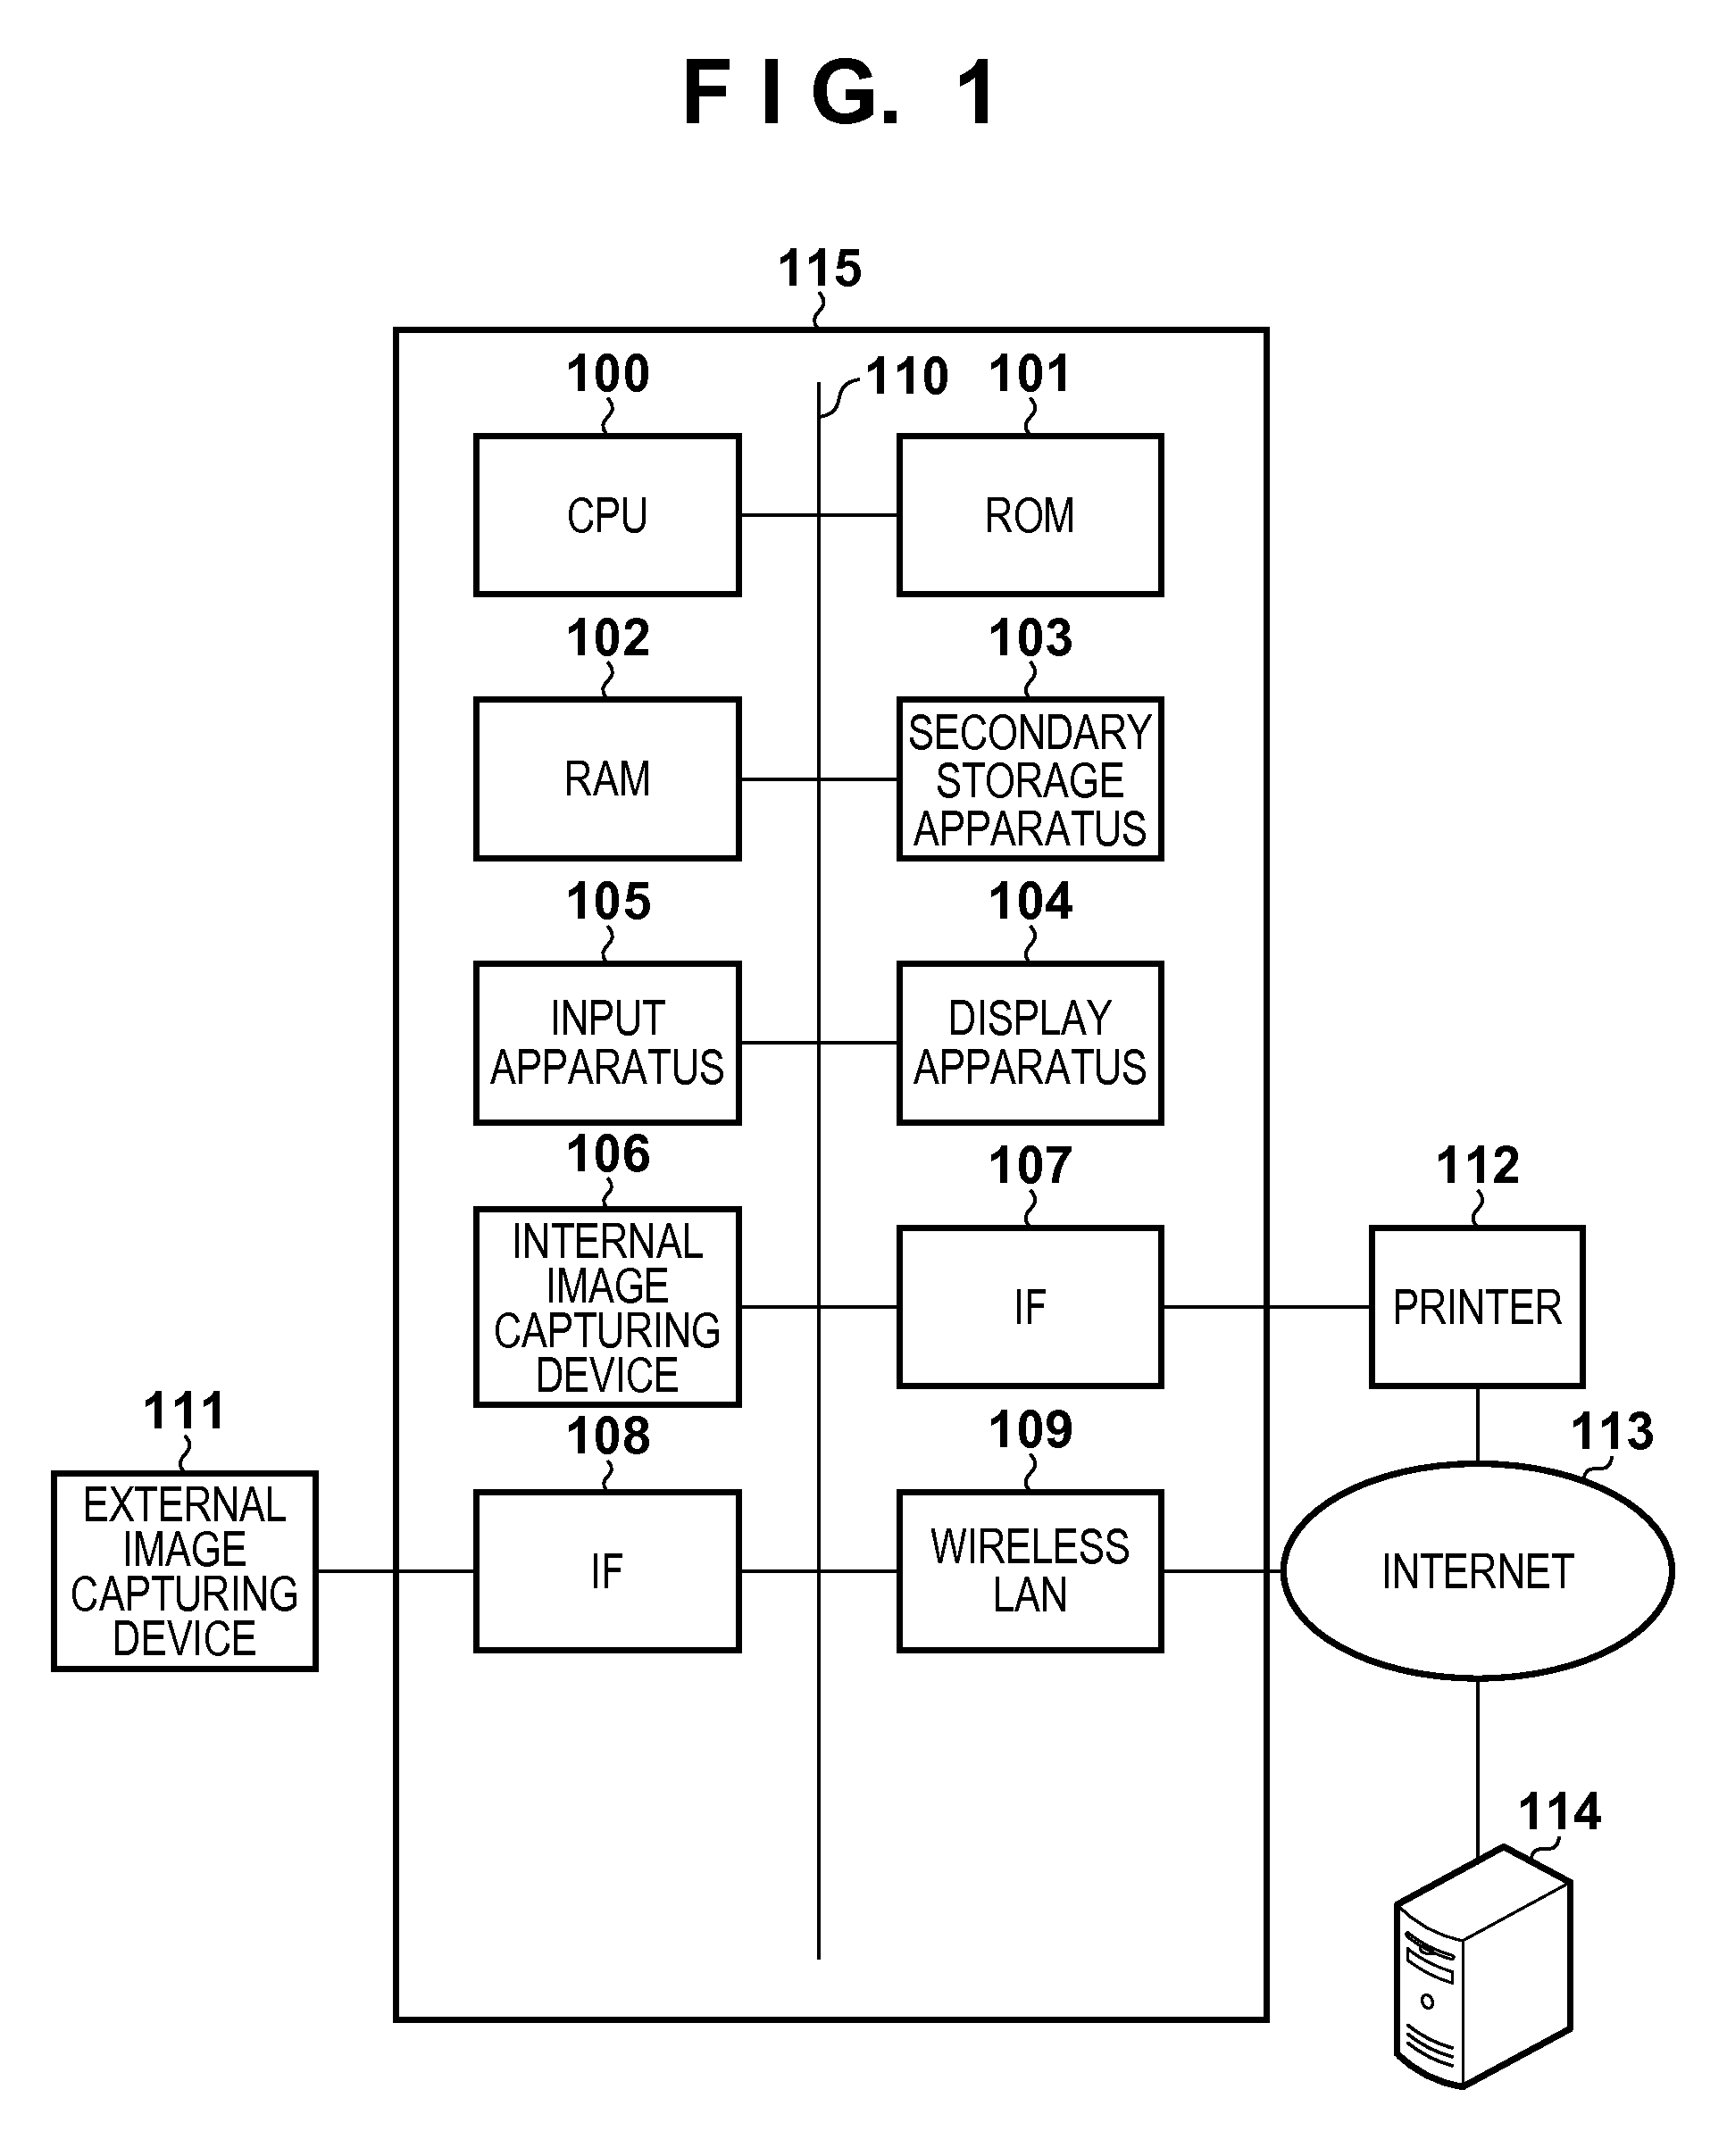 Image processing apparatus, method thereof, and computer-readable storage medium